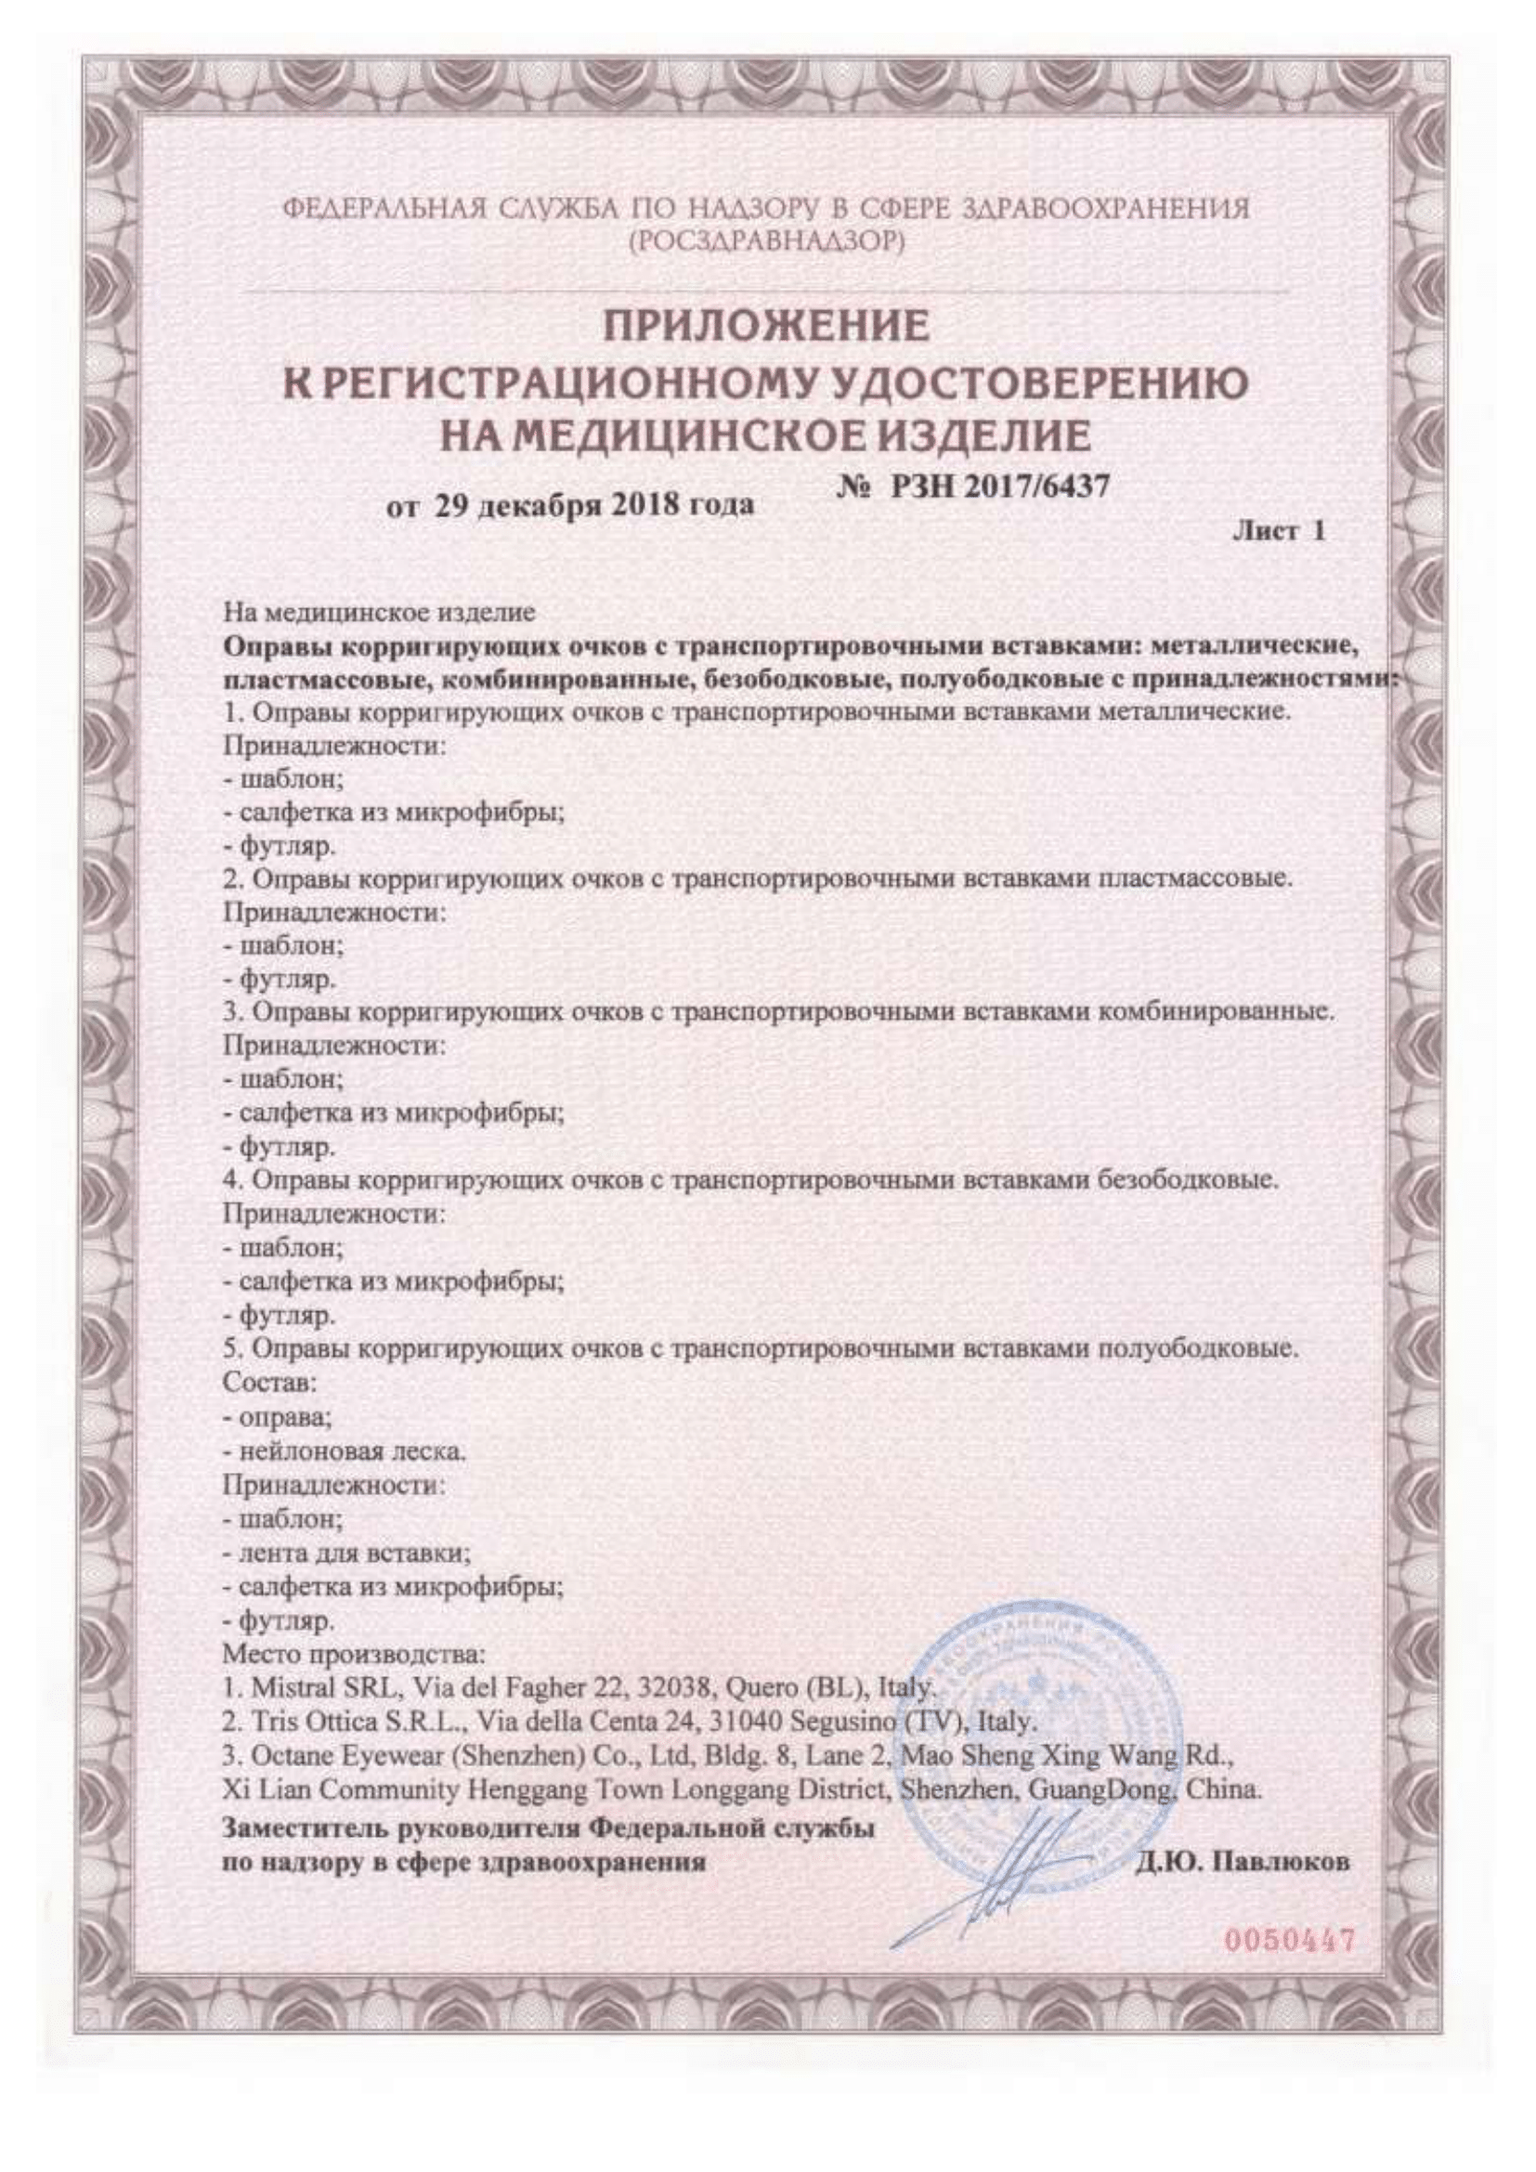 /images/certificates/sertificate4-13.png